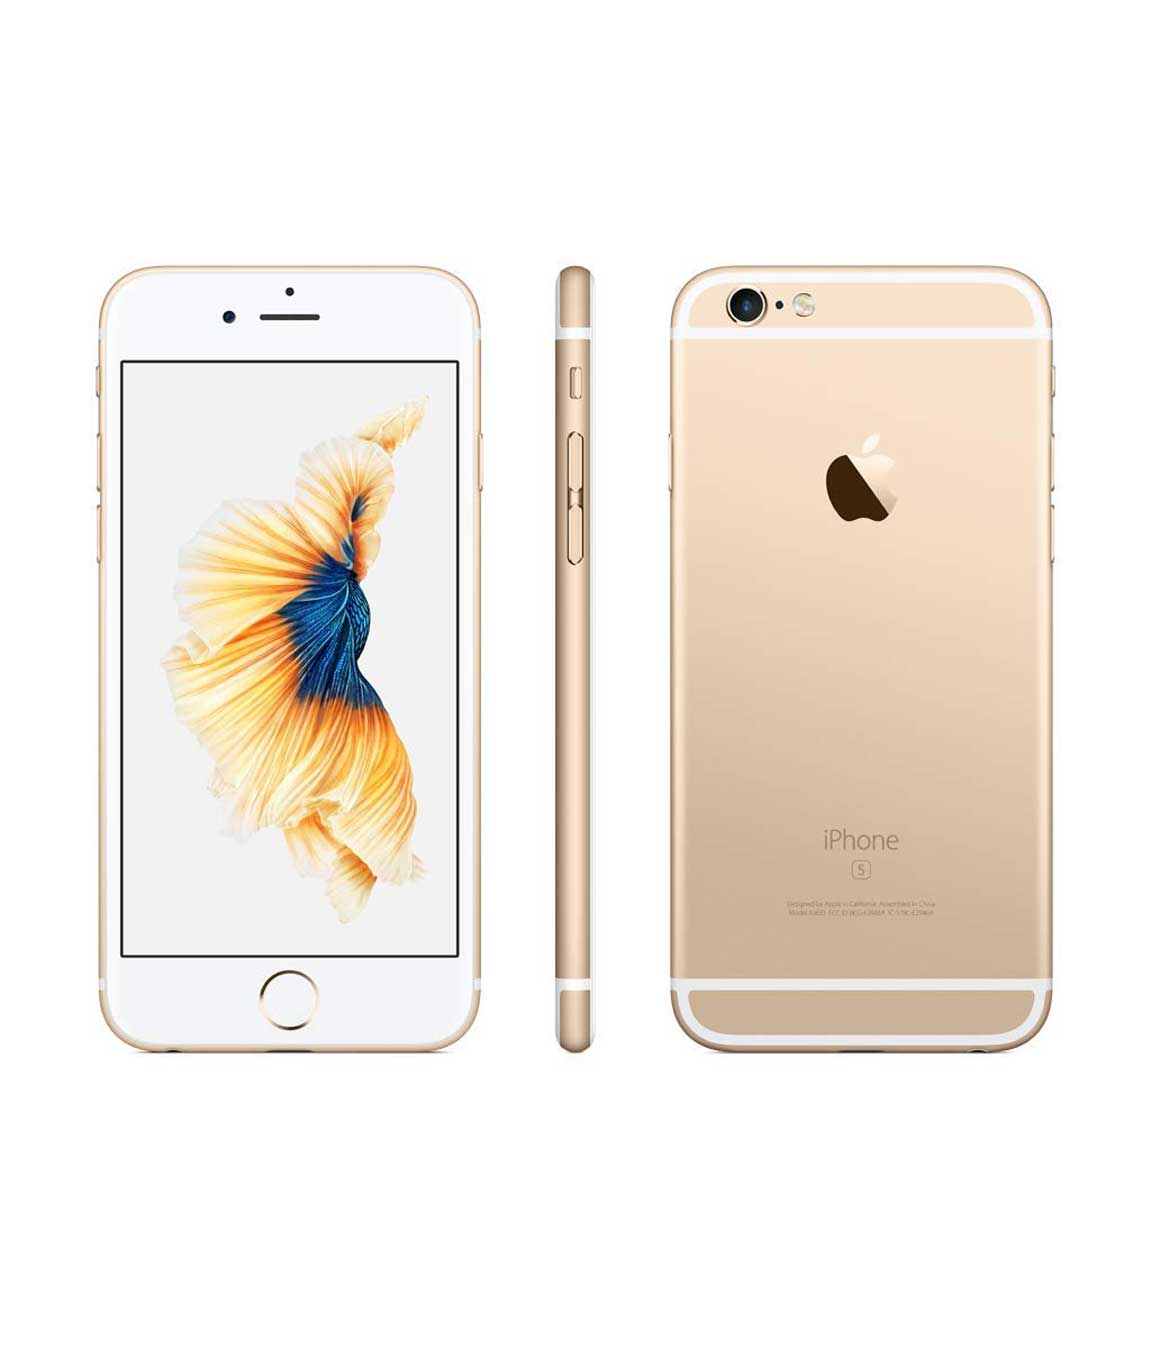 Apple iPhone 6s (32GB) - Rose Gold